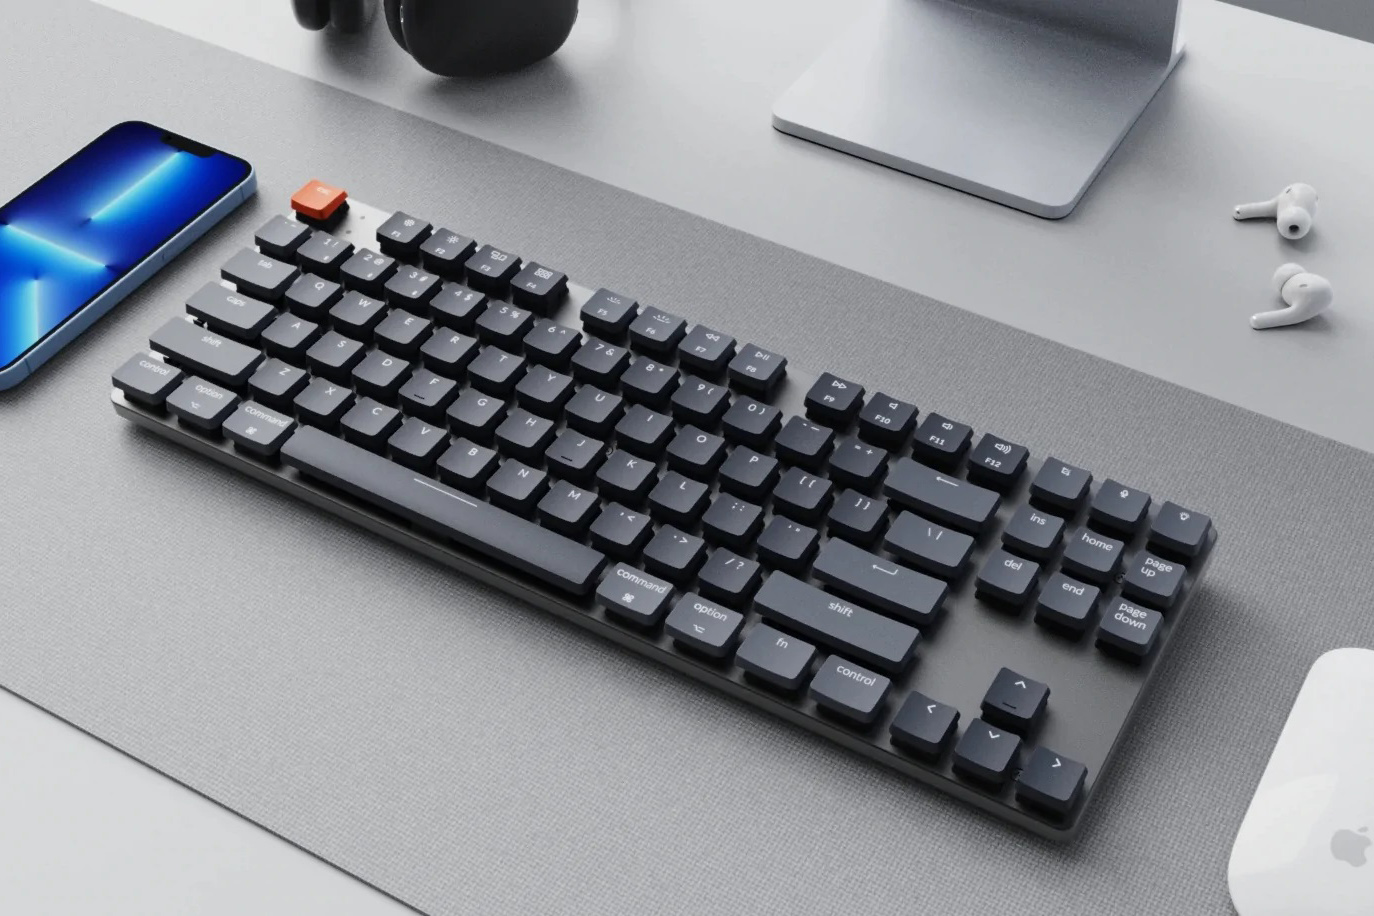 The Keychron K1 SE low profile keyboard on a desk.